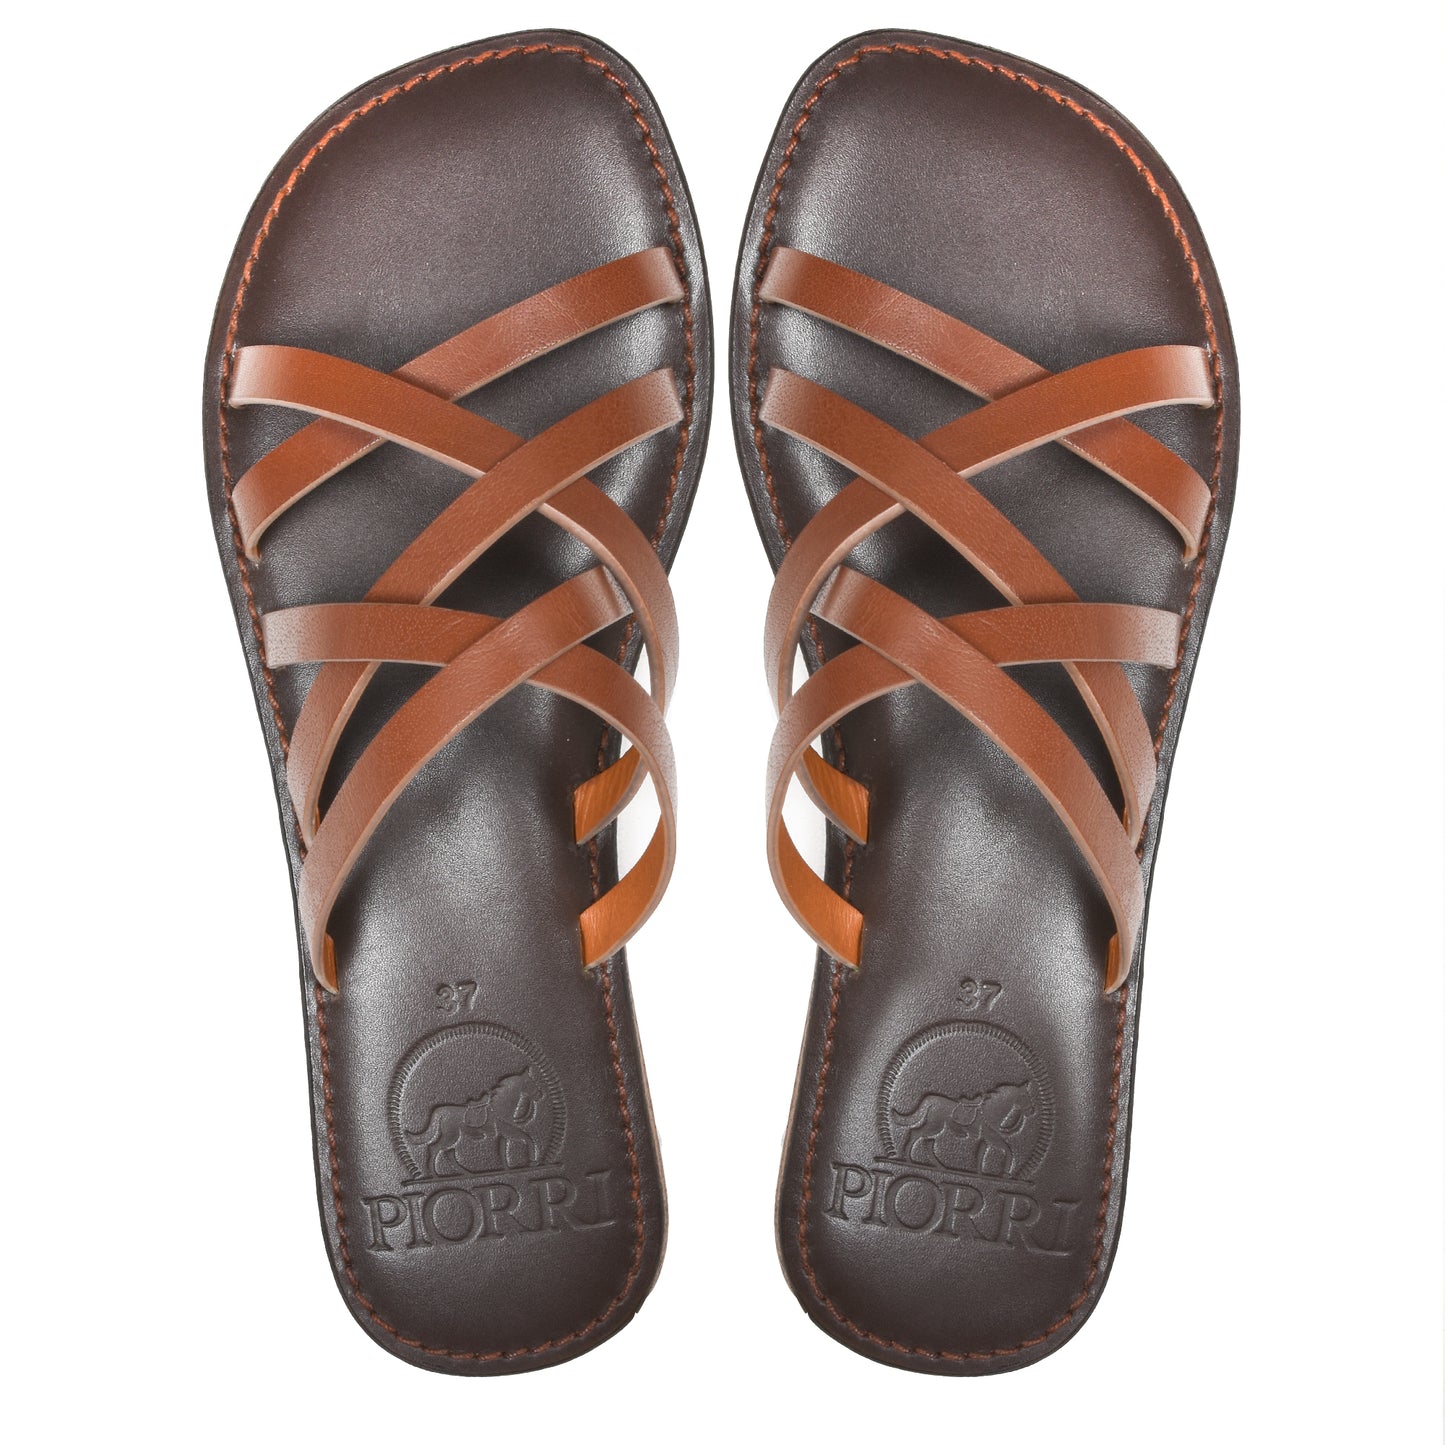 PIORRI by Aerothotic - Averi Women’s Flat Natural Leather Comfortable Slide Sandals - LK2113